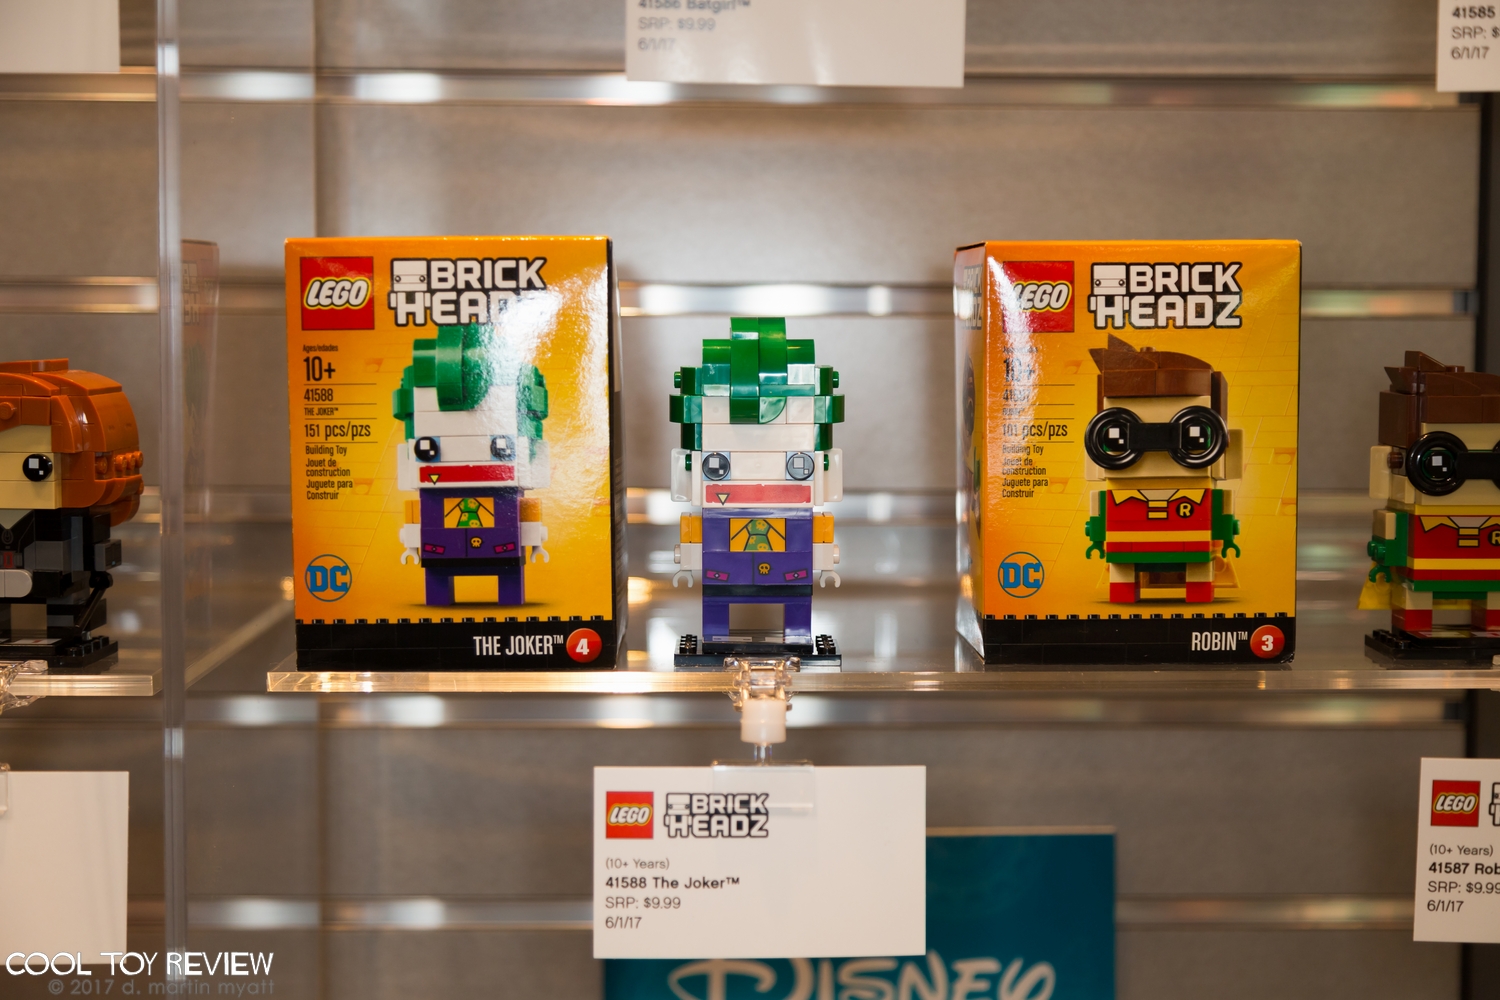 LEGO-2017-International-Toy-Fair-Brick-Headz-010.jpg